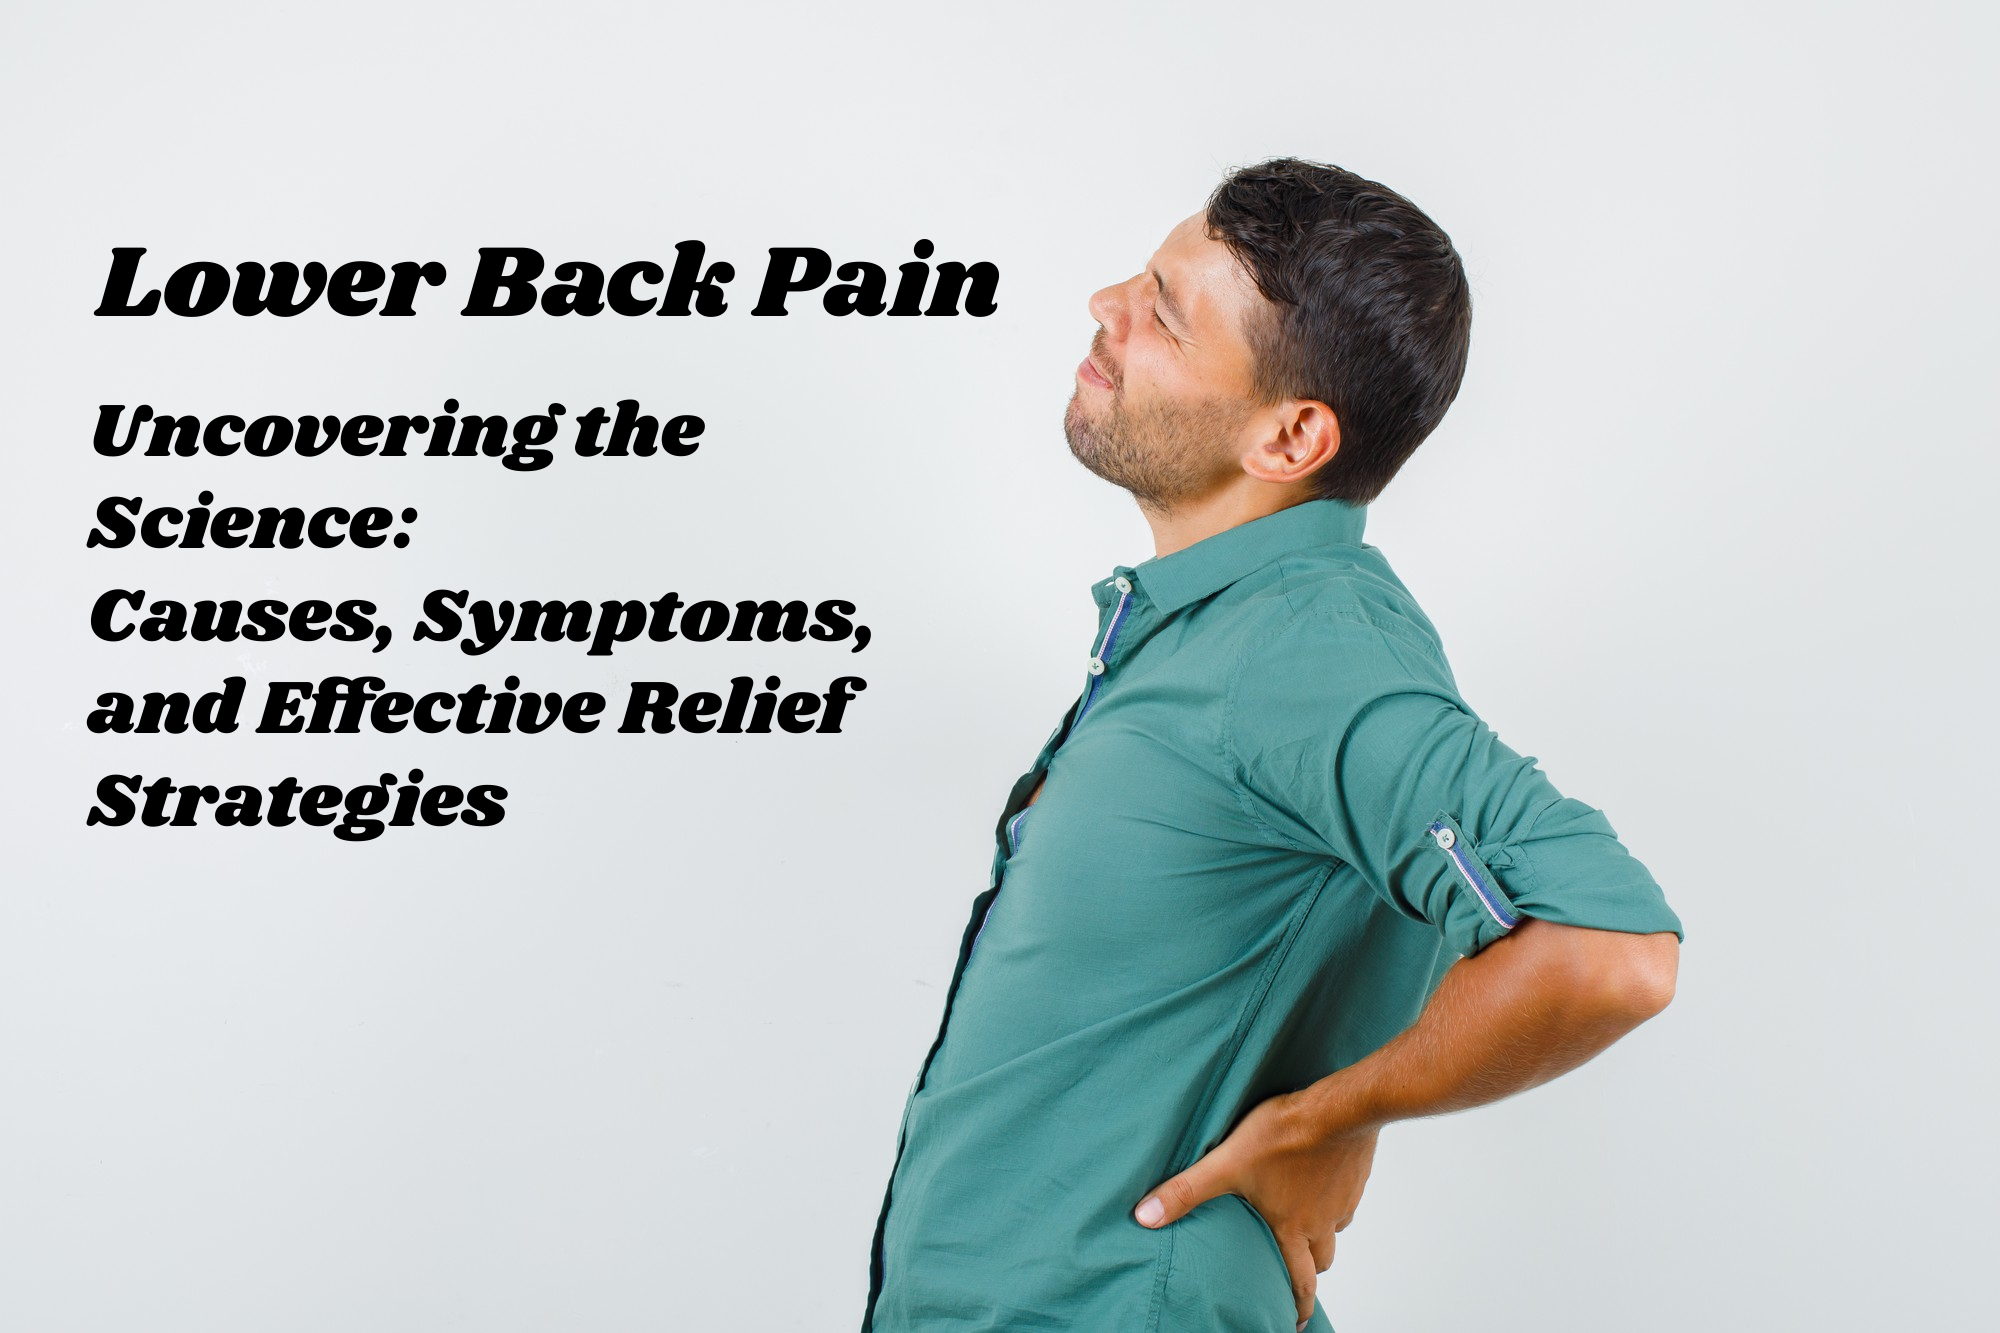 backache causes